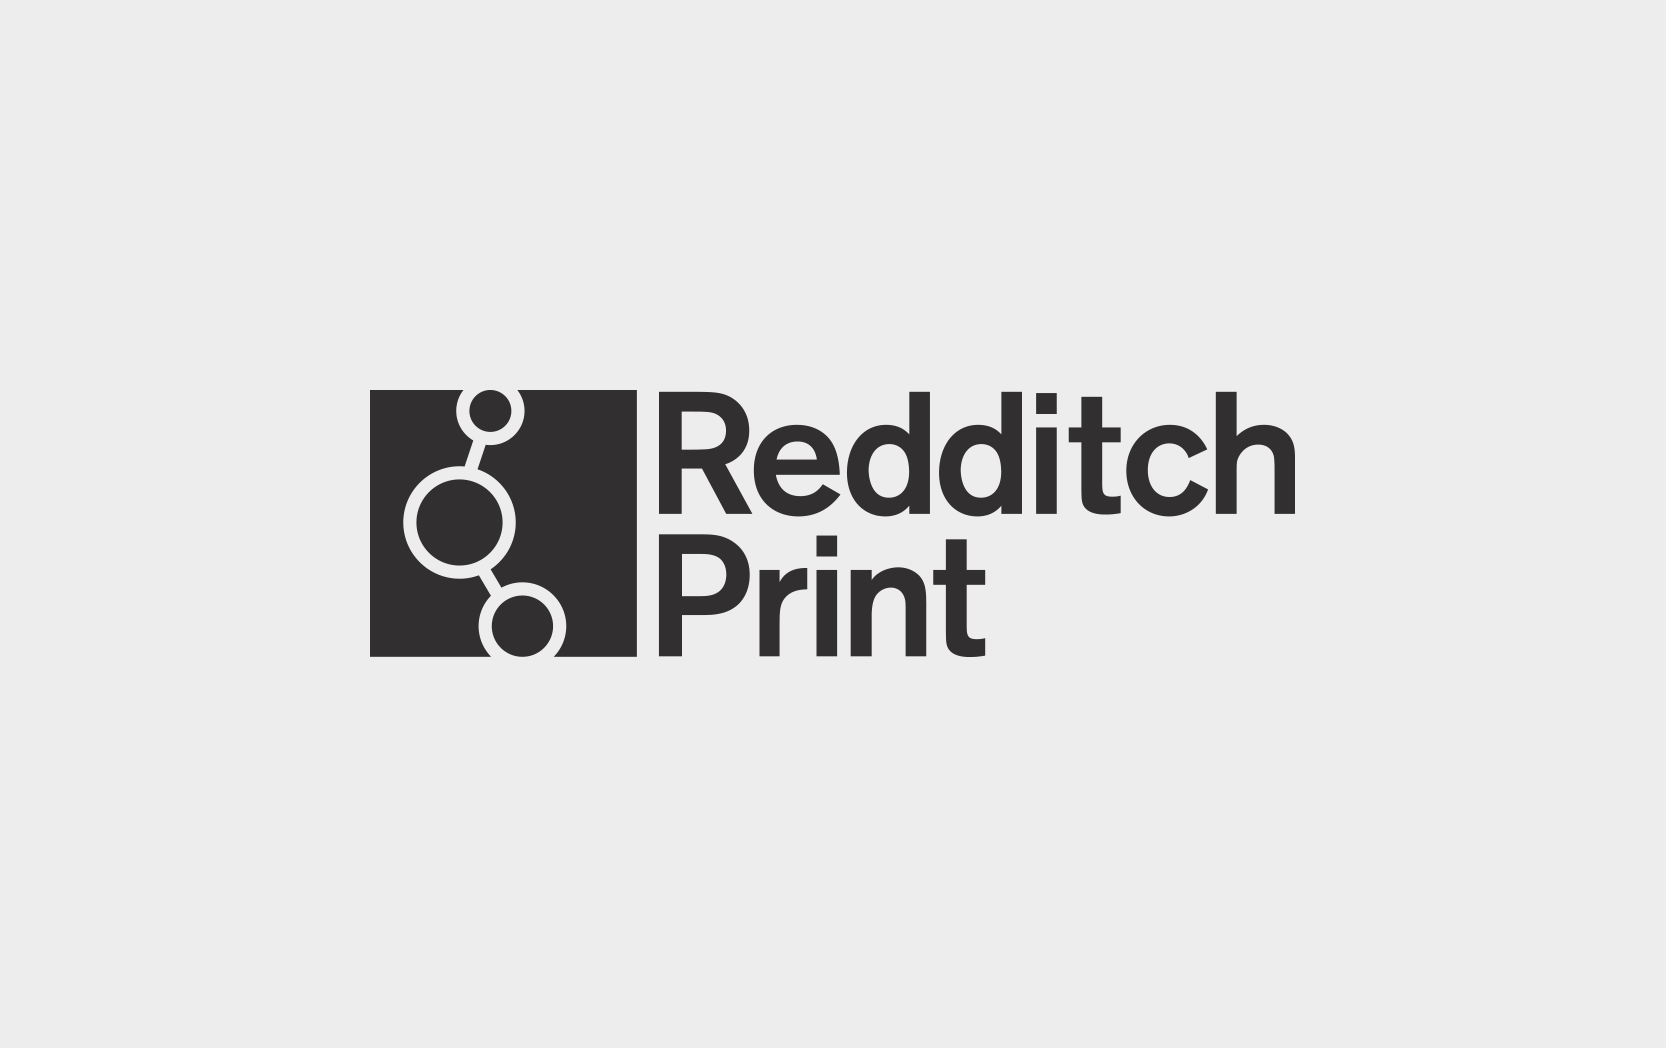 Redditch Print